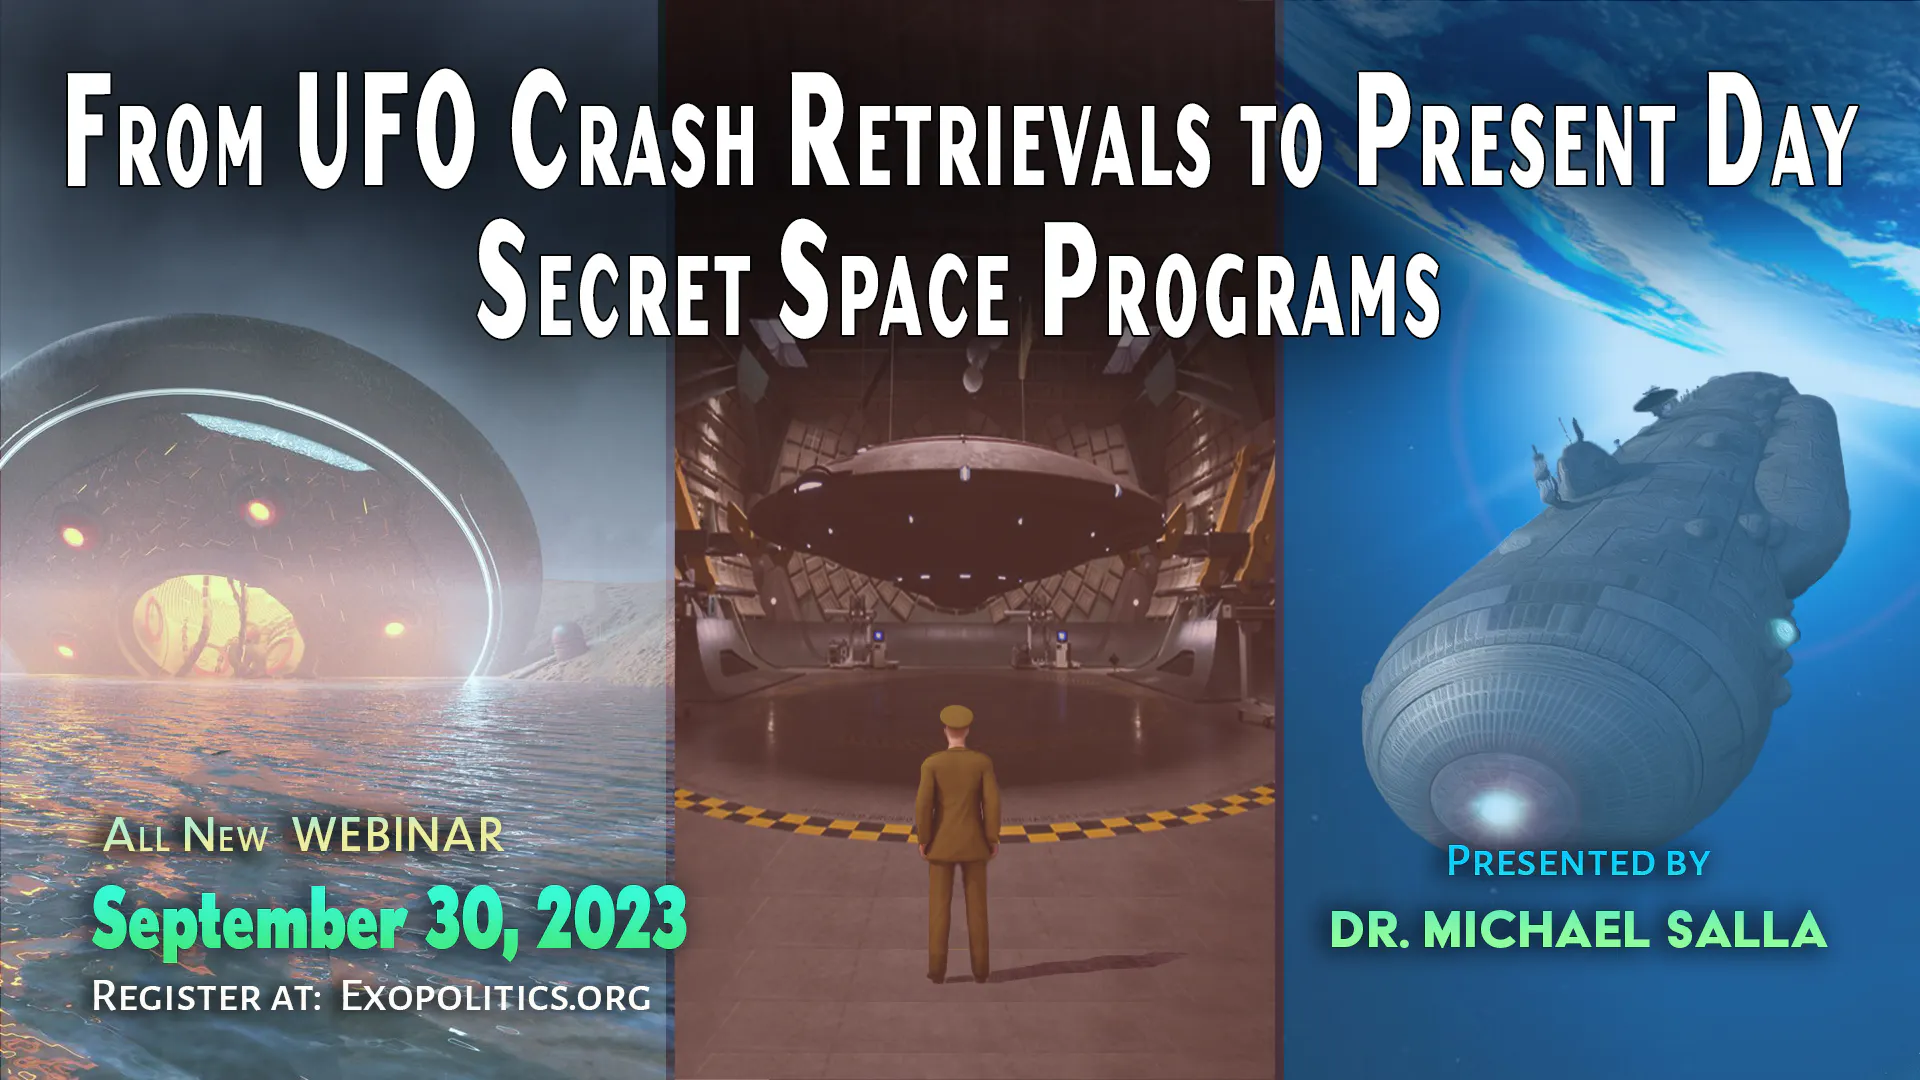 From UFO Crash Retrievals to Present Day Secret Space Programs event cover photo